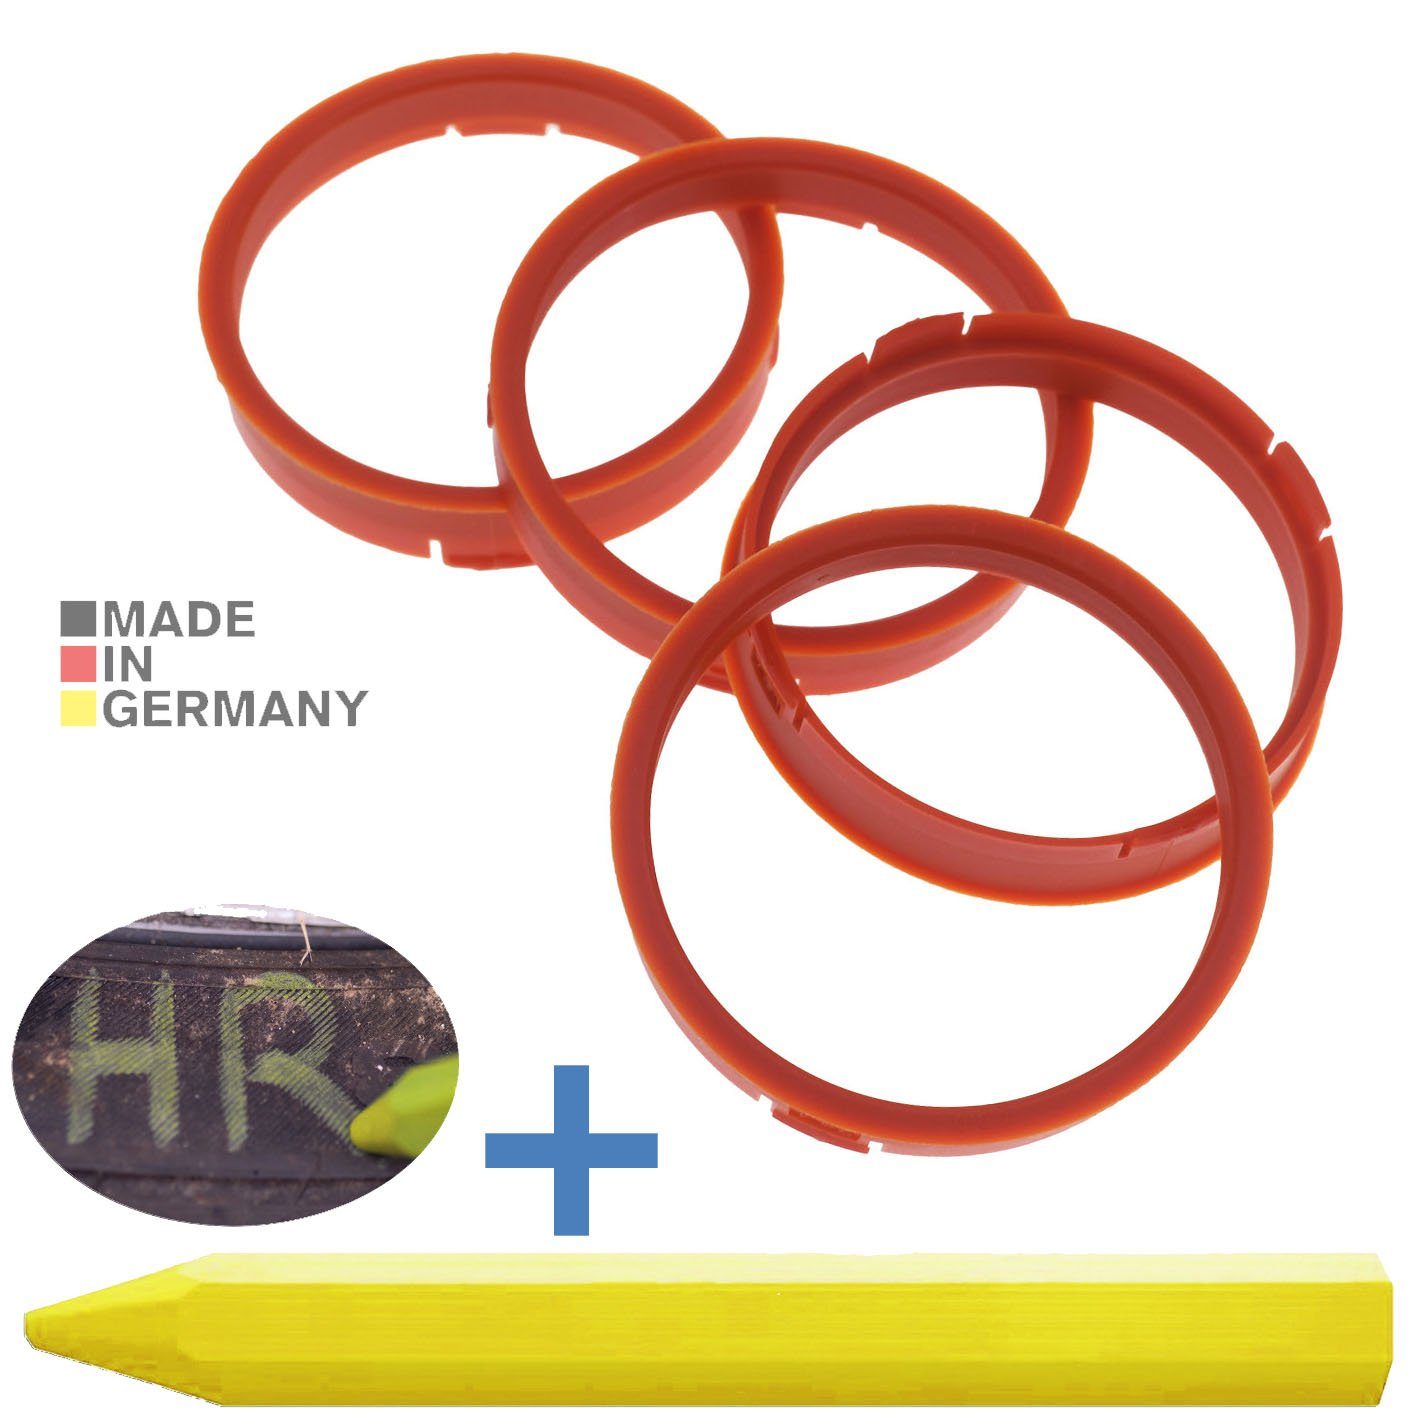 RKC Reifenstift 4X Zentrierringe Orange Felgen Ringe + 1x Reifen Kreide Fett Stift, Maße: 73,1 x 66,6 mm